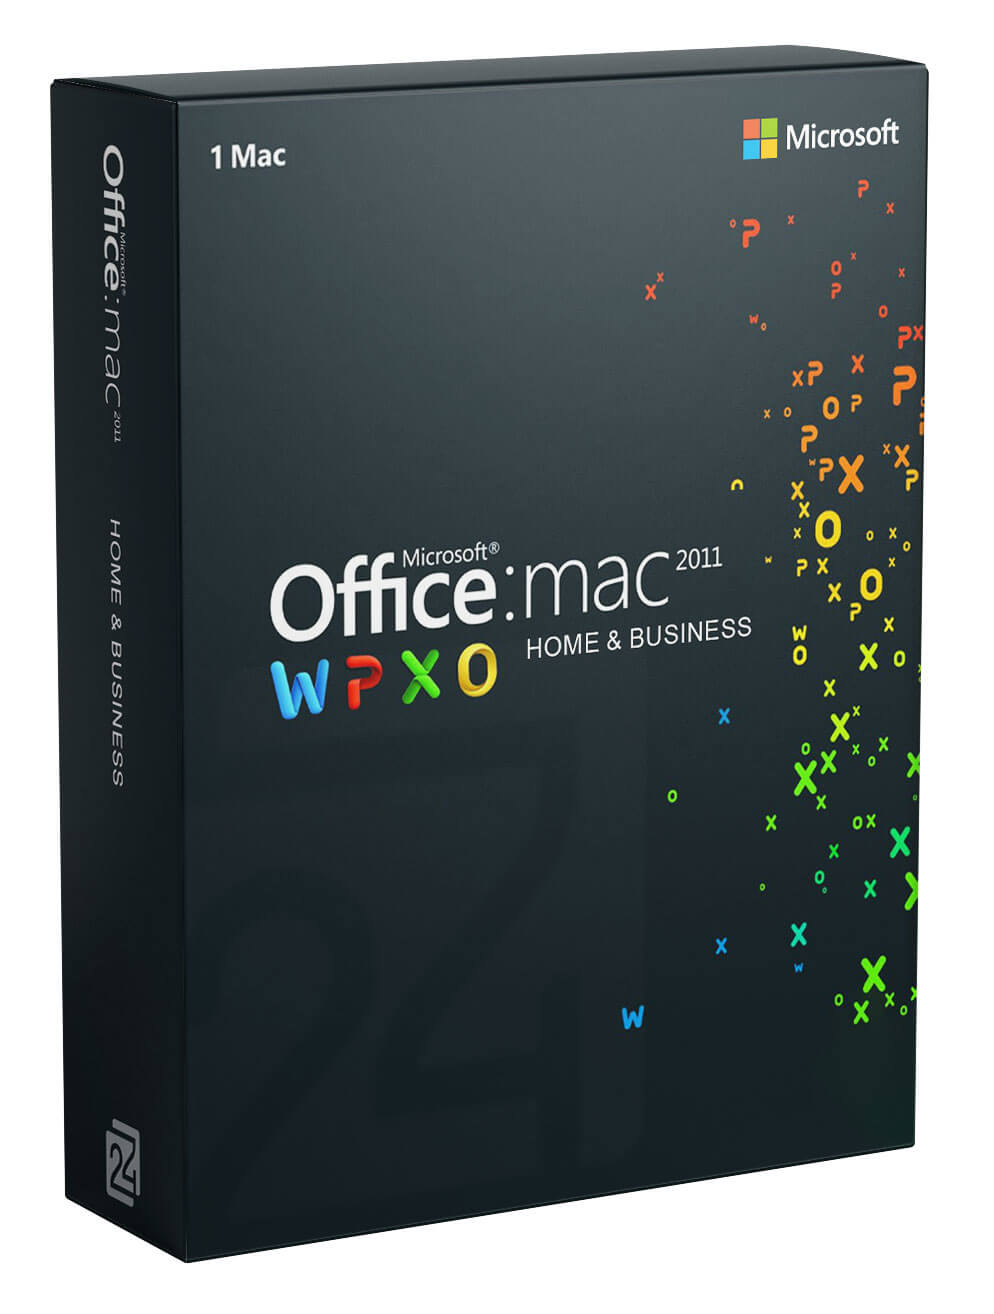 https://blitzhandel24.imgbolt.de/media/image/65/fe/cd/Microsoft-Office-Mac-2011-Home-and-Business.jpg